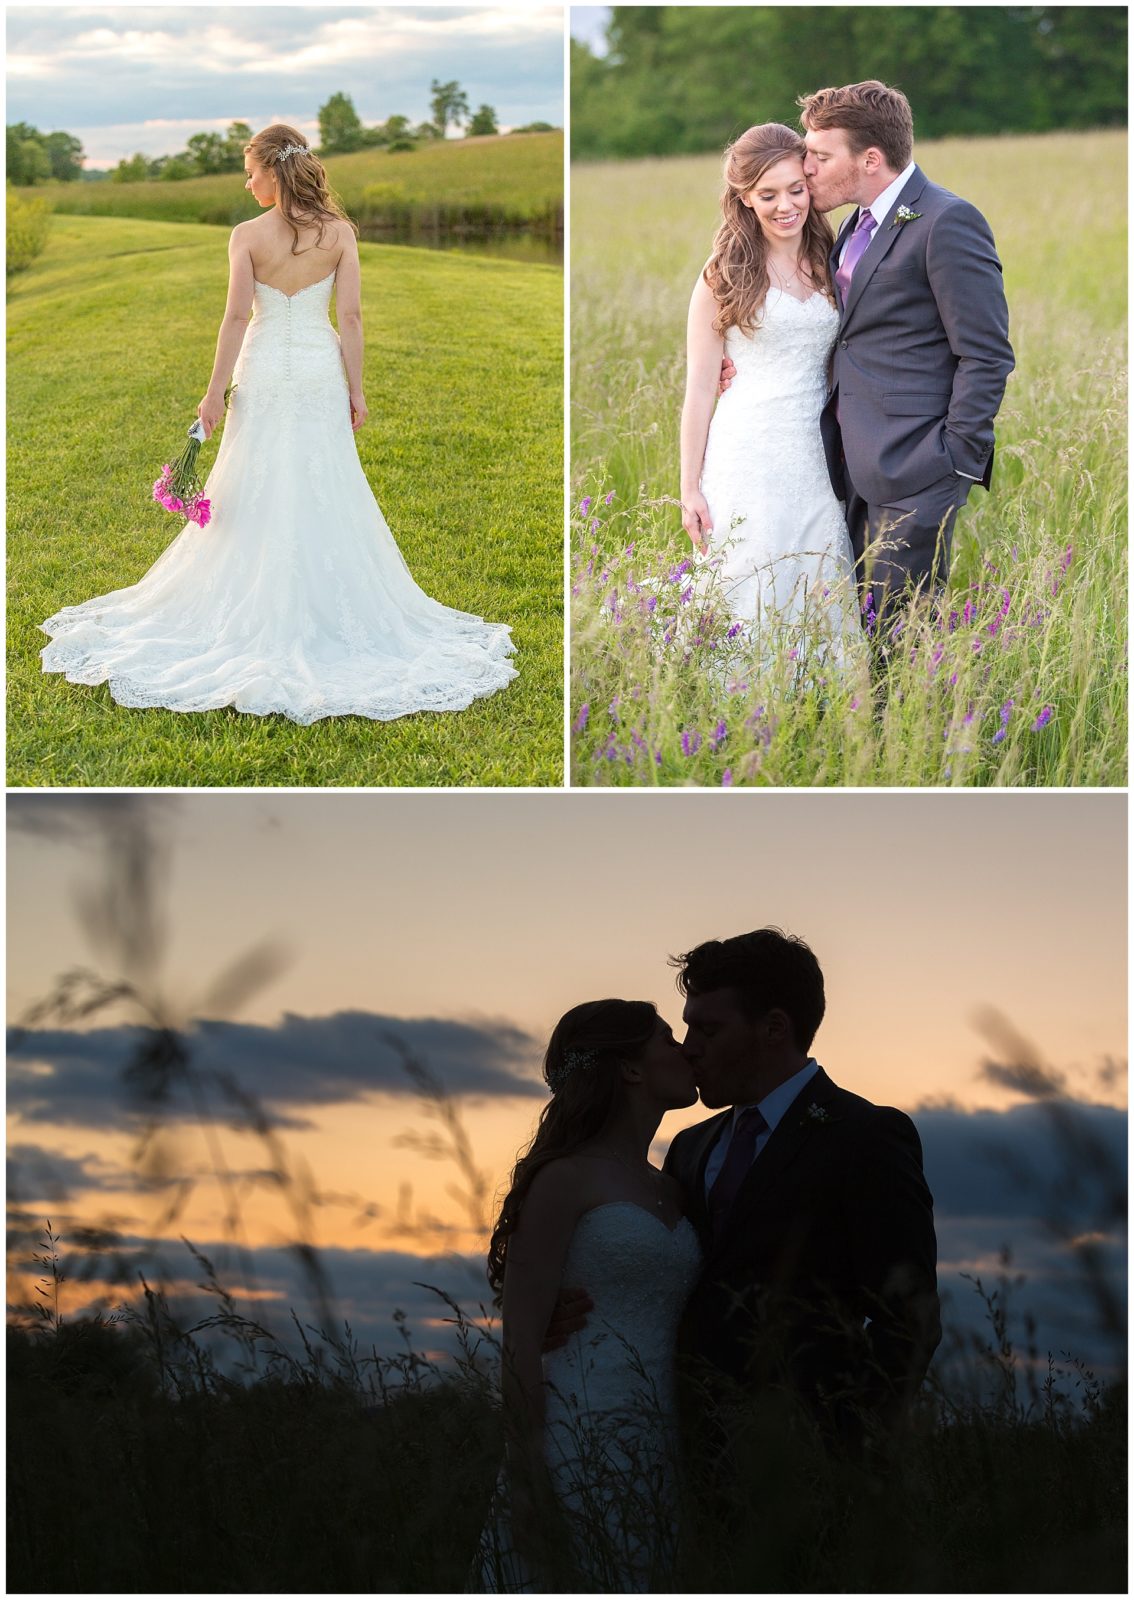 Luke & Leah's Wedding Photography Blog 19